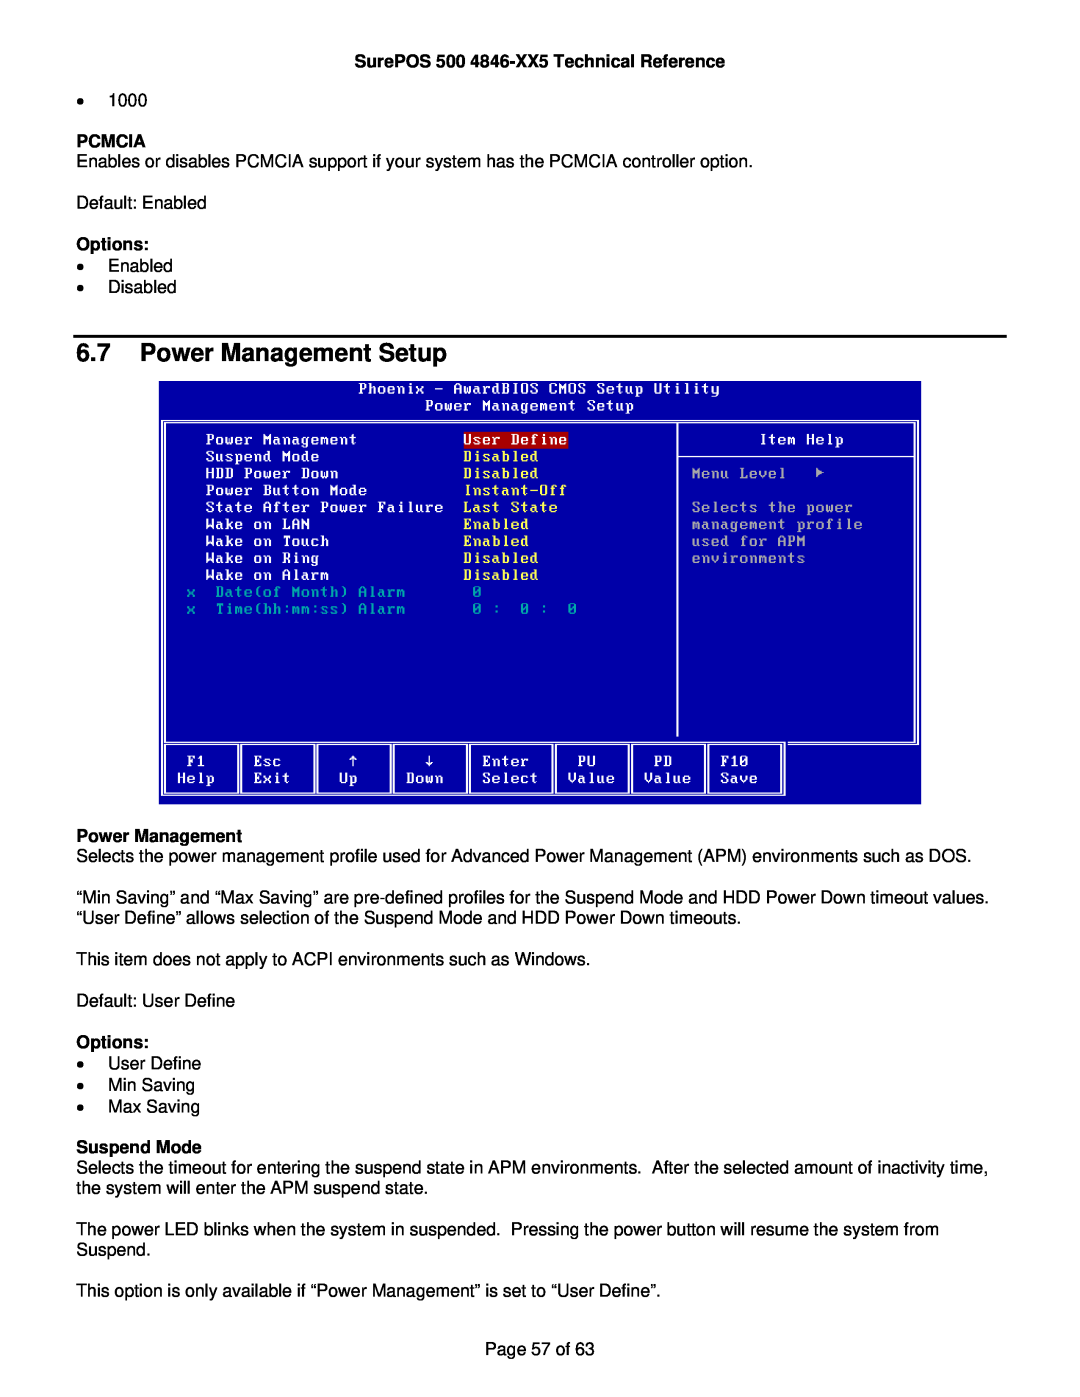 IBM manual Power Management Setup, SurePOS 500 4846-XX5 Technical Reference, Pcmcia, Options, Suspend Mode 